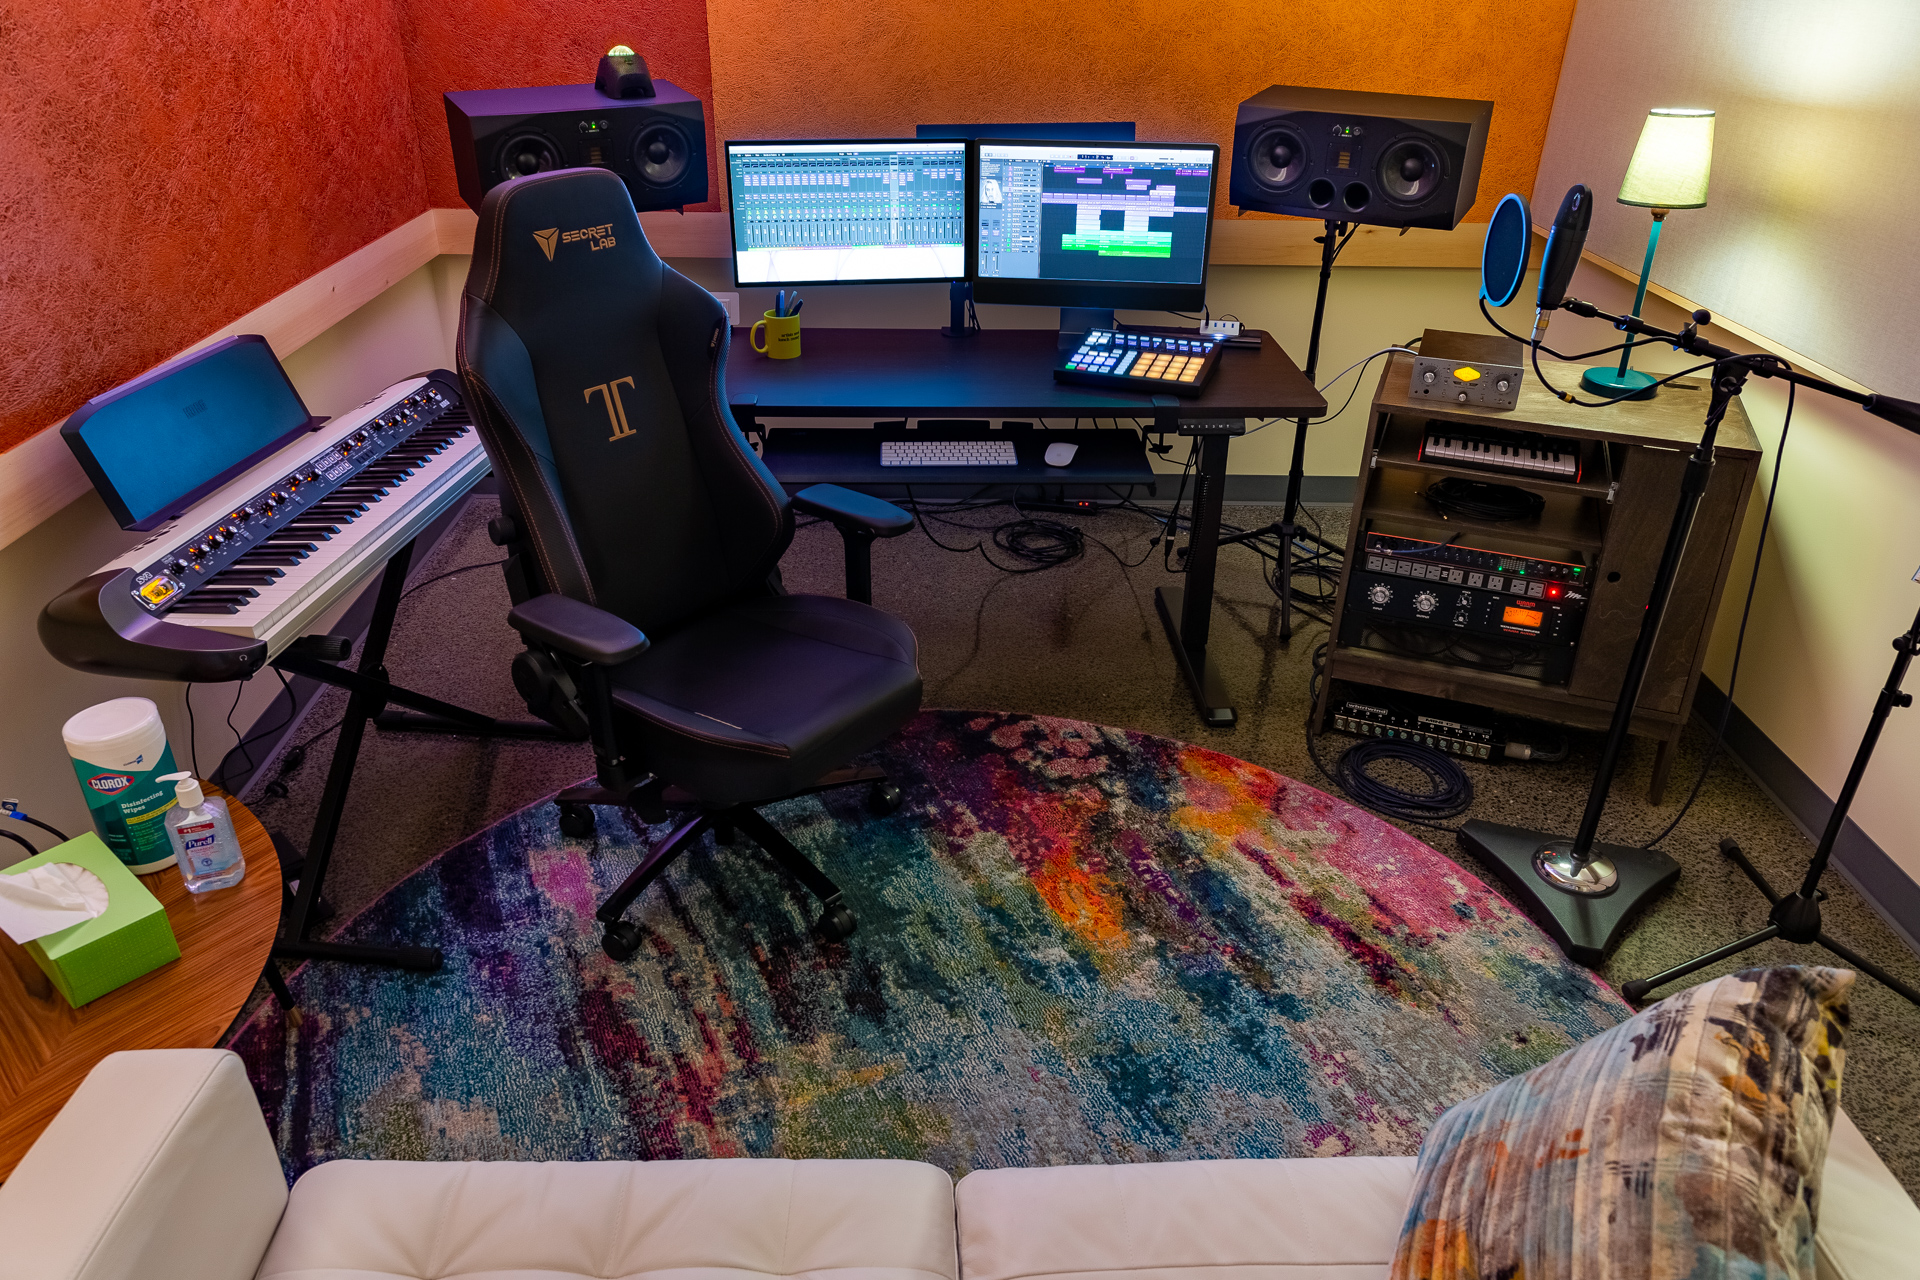 Production Studio